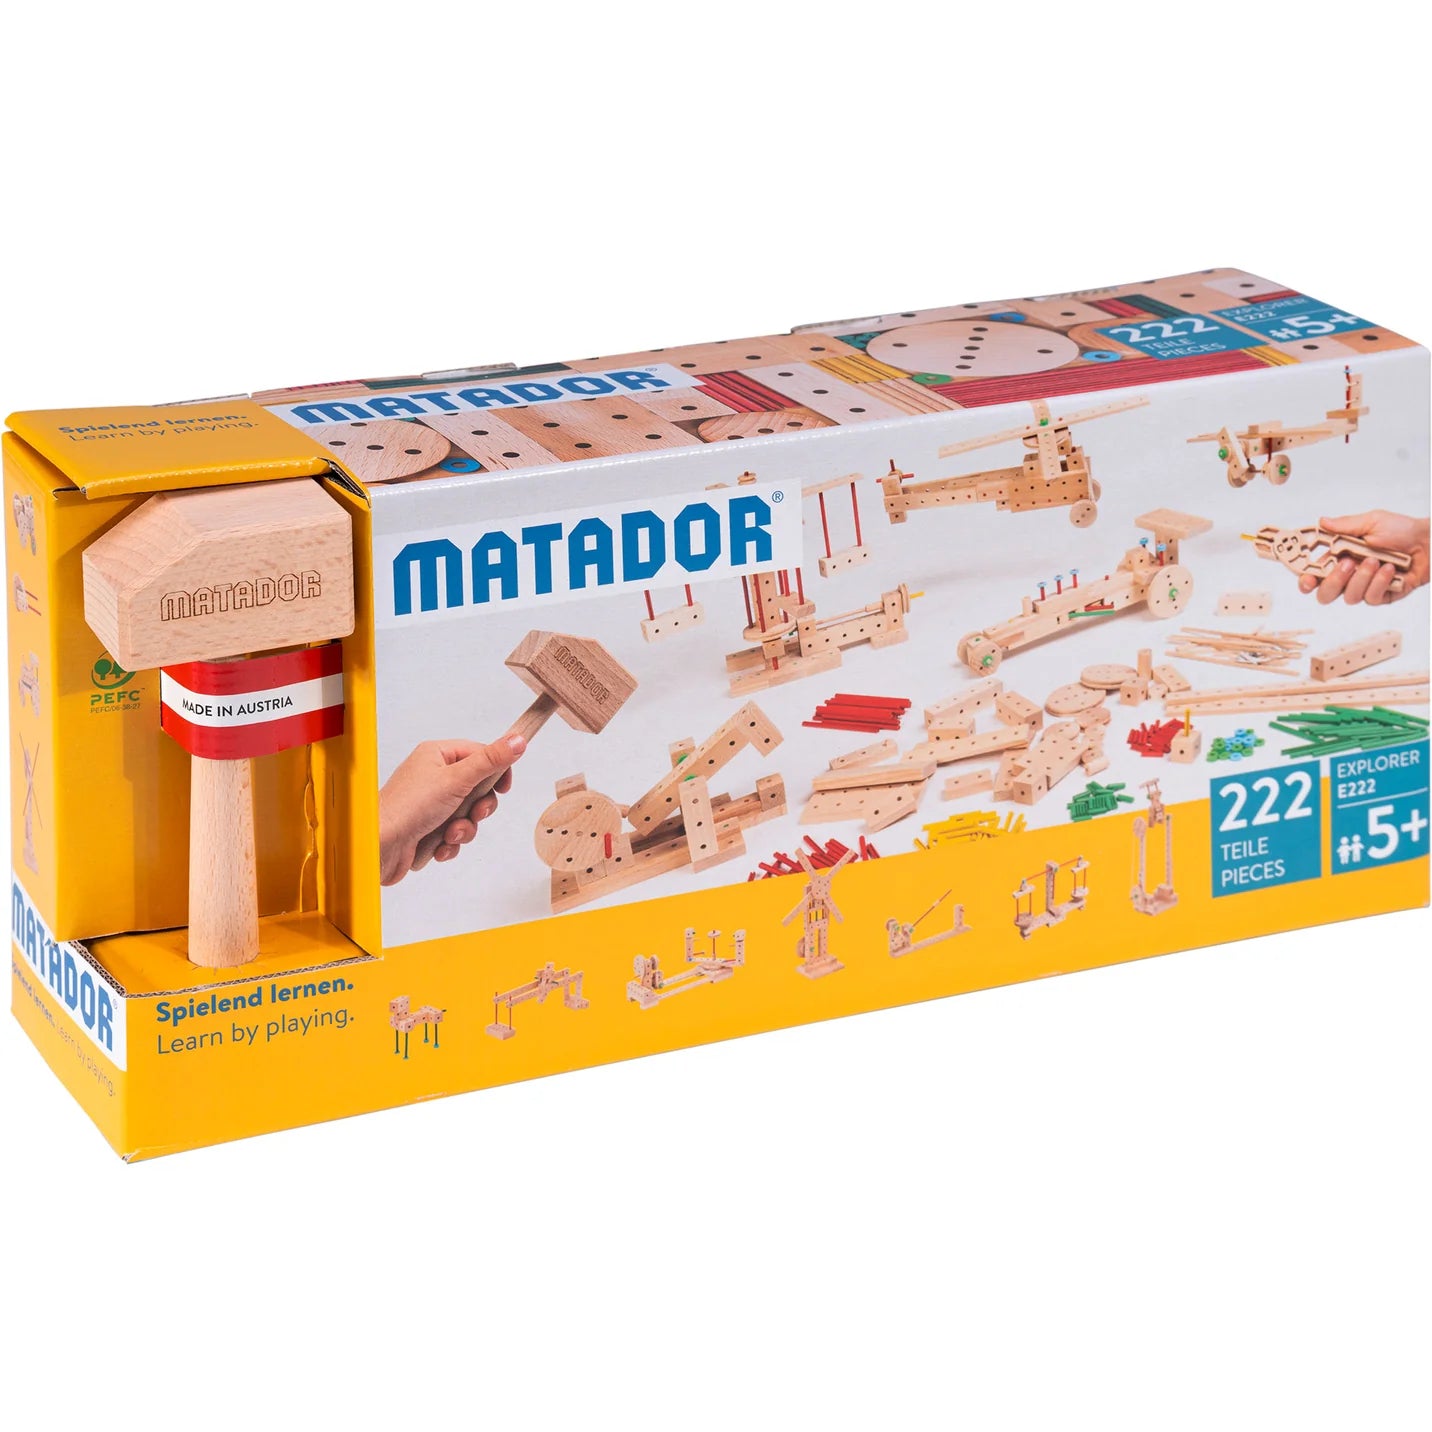 Matador Explorer - Wooden Construction Set -  E222 - 5+